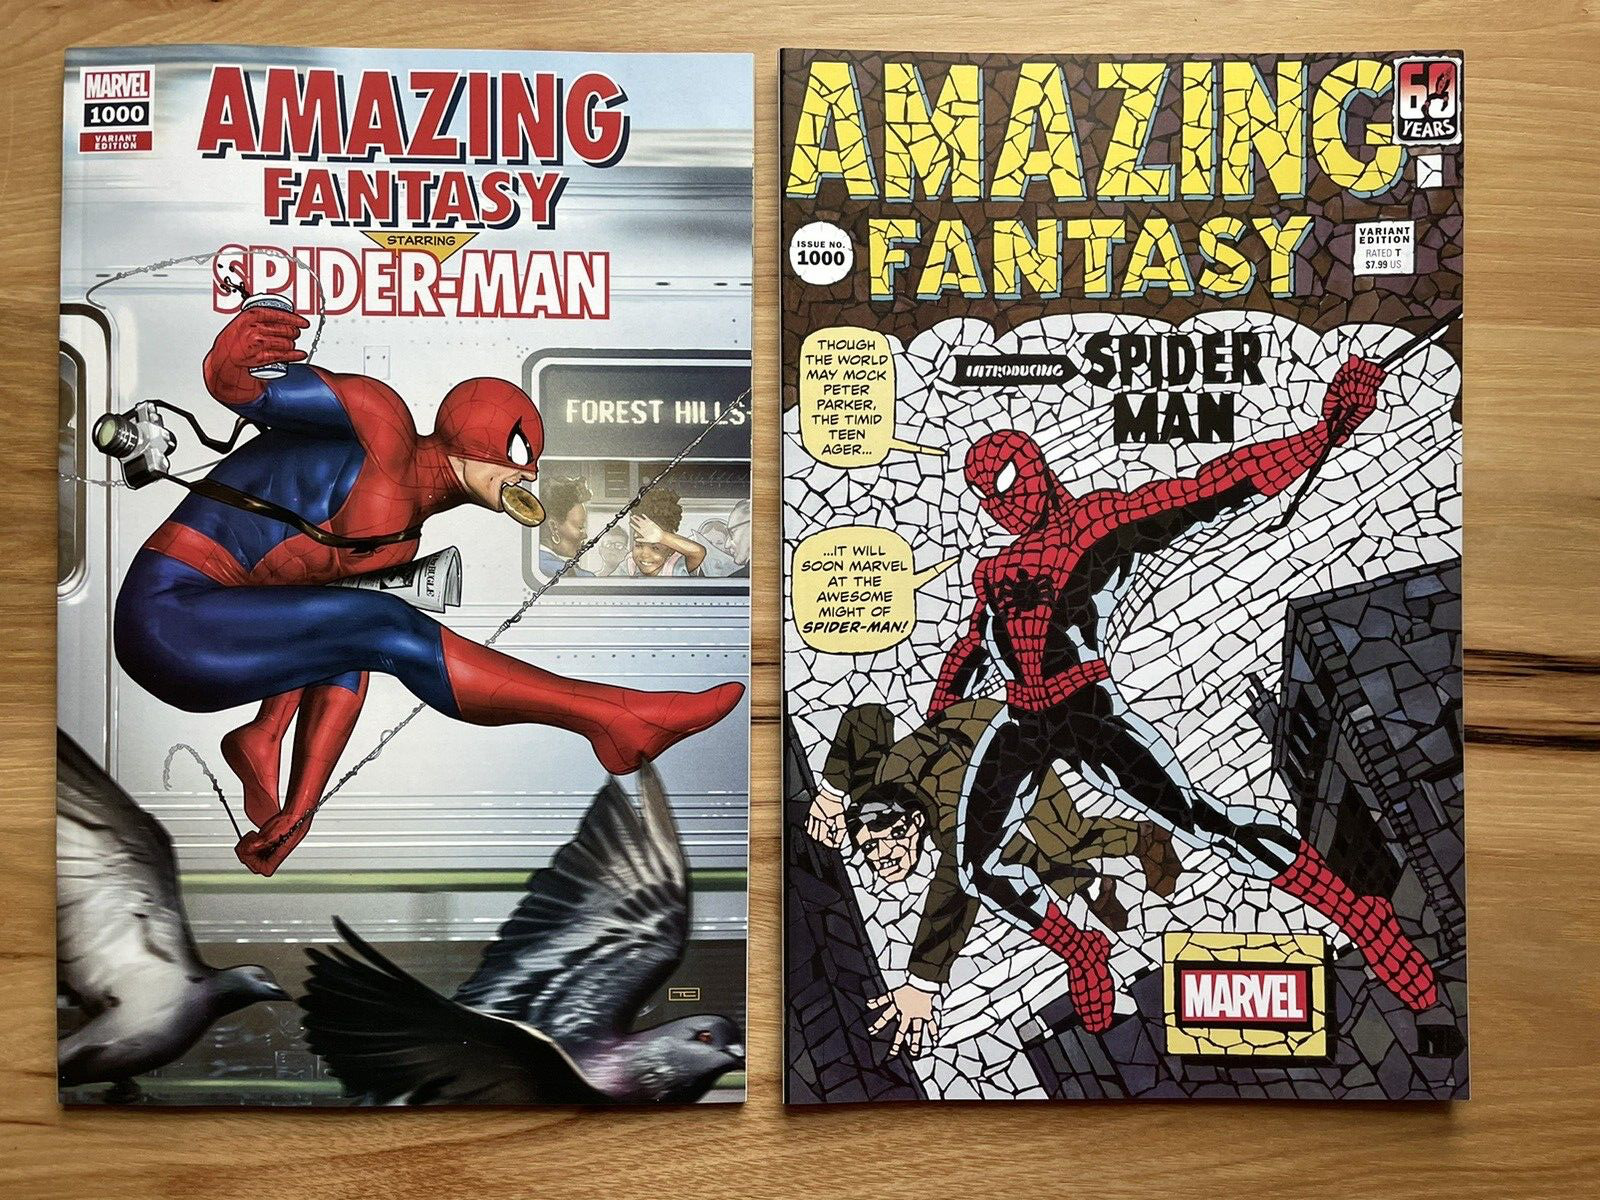 Amazing Fantasy #1000 SET (shattered variant/1:25) Amazing Fantasy 15 Spider-man